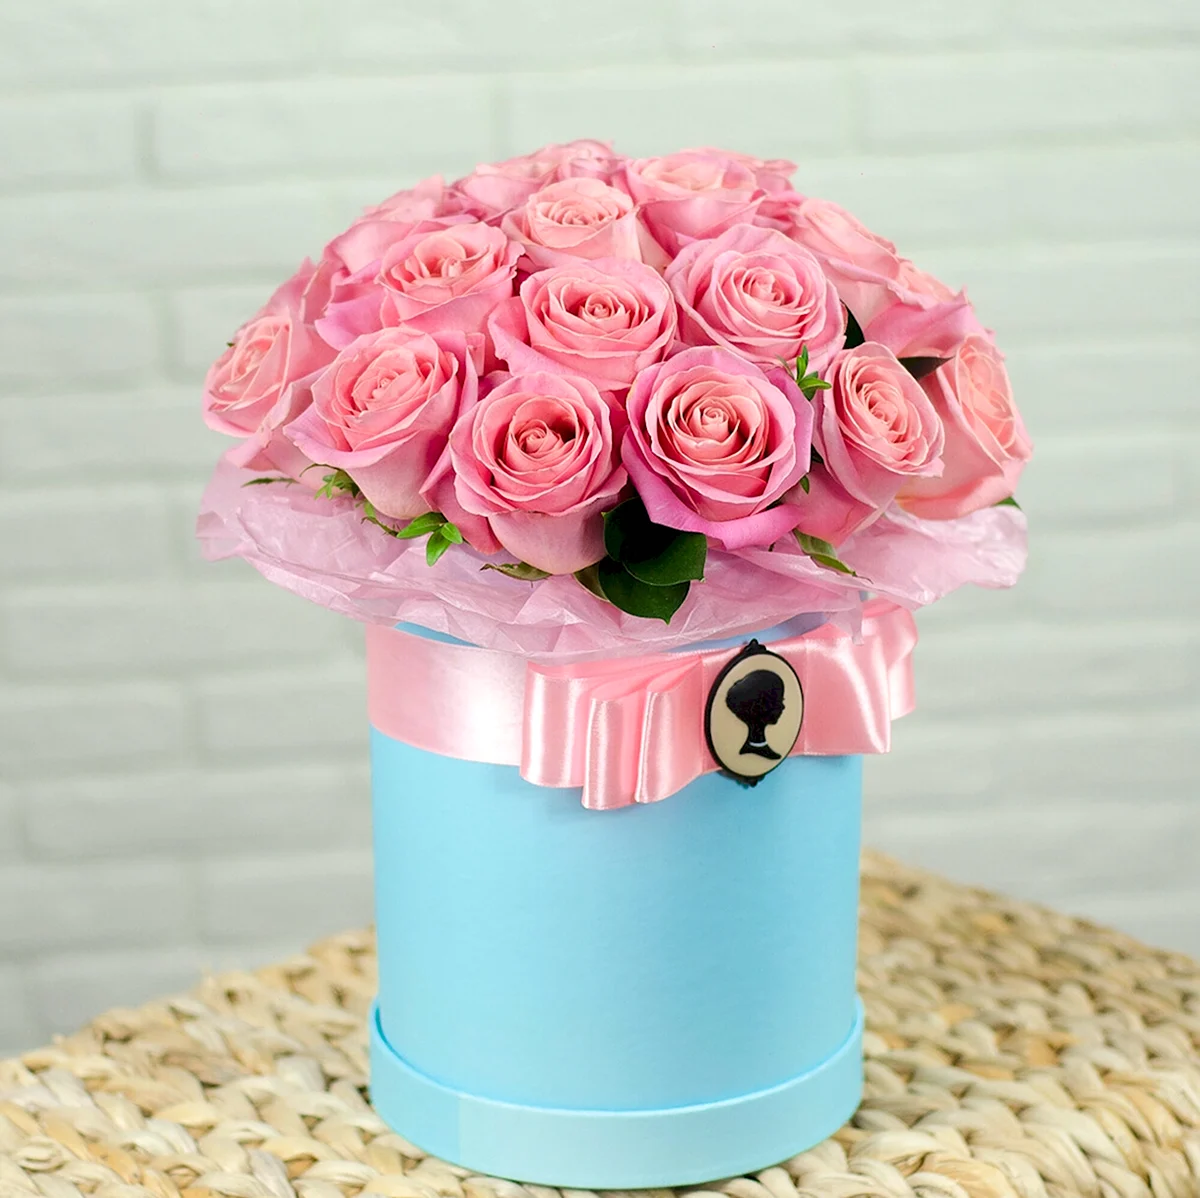 Шляпная коробка с розами